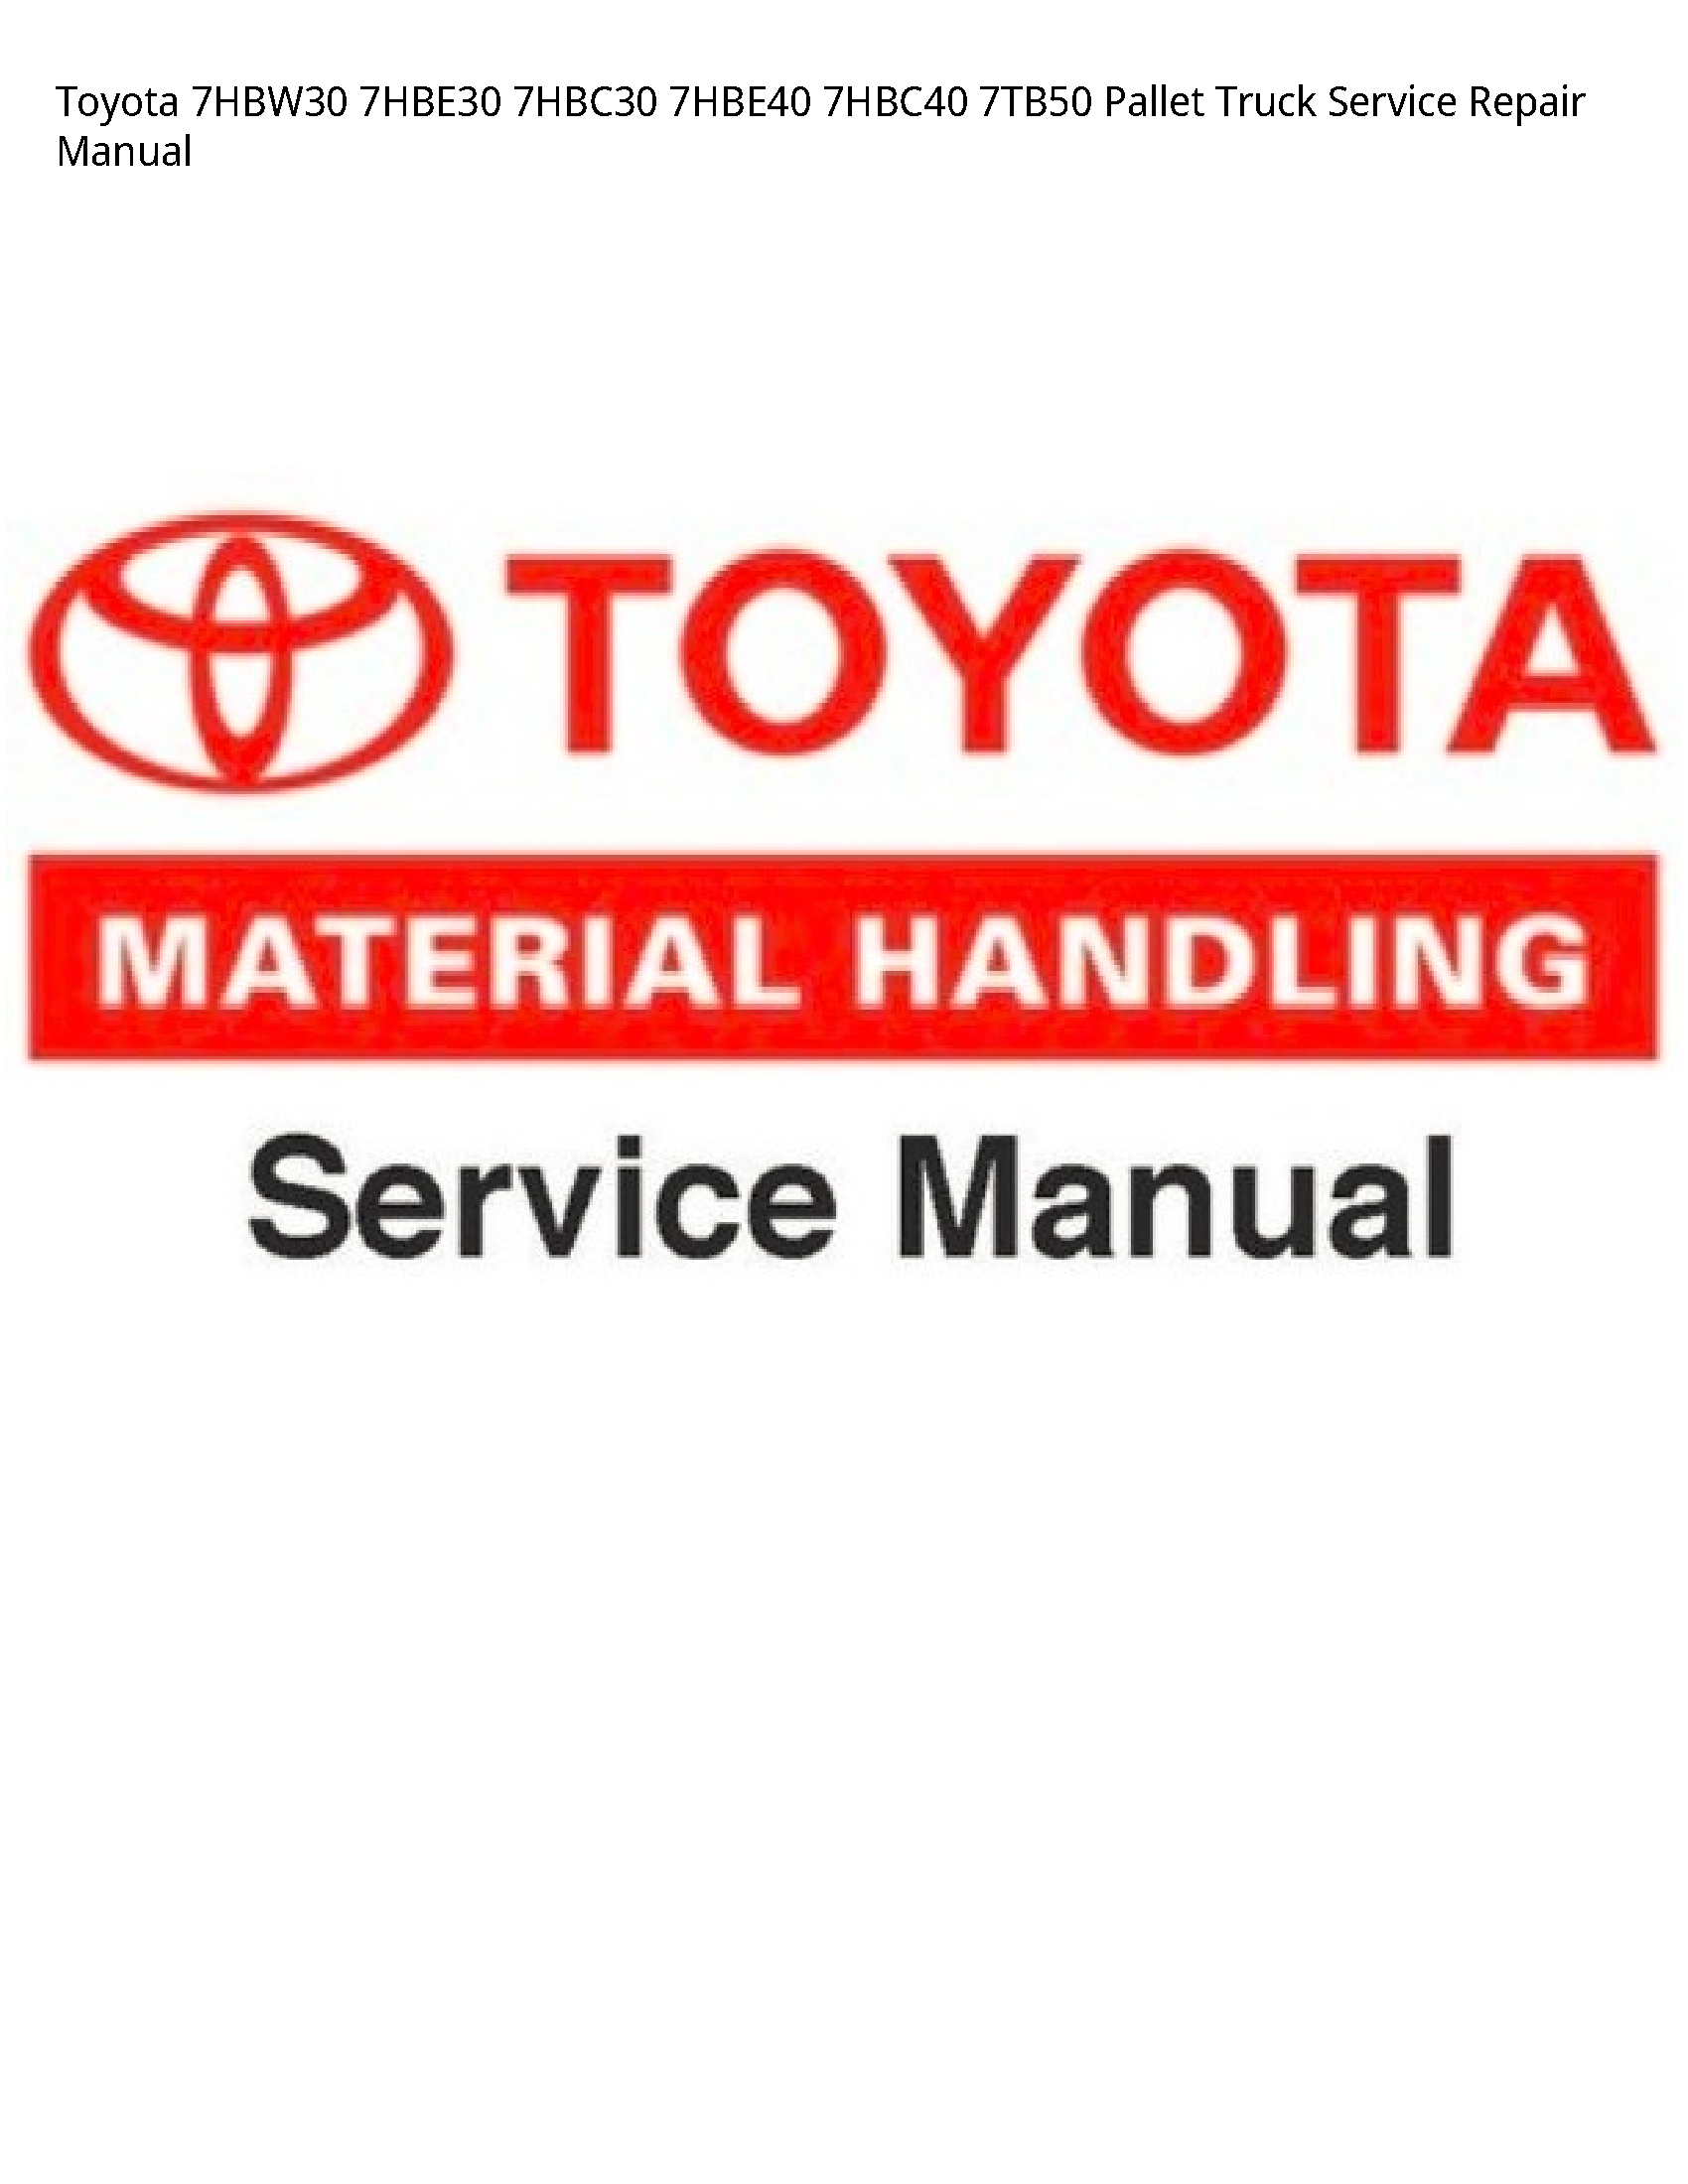 Toyota 7HBW30 Pallet Truck manual